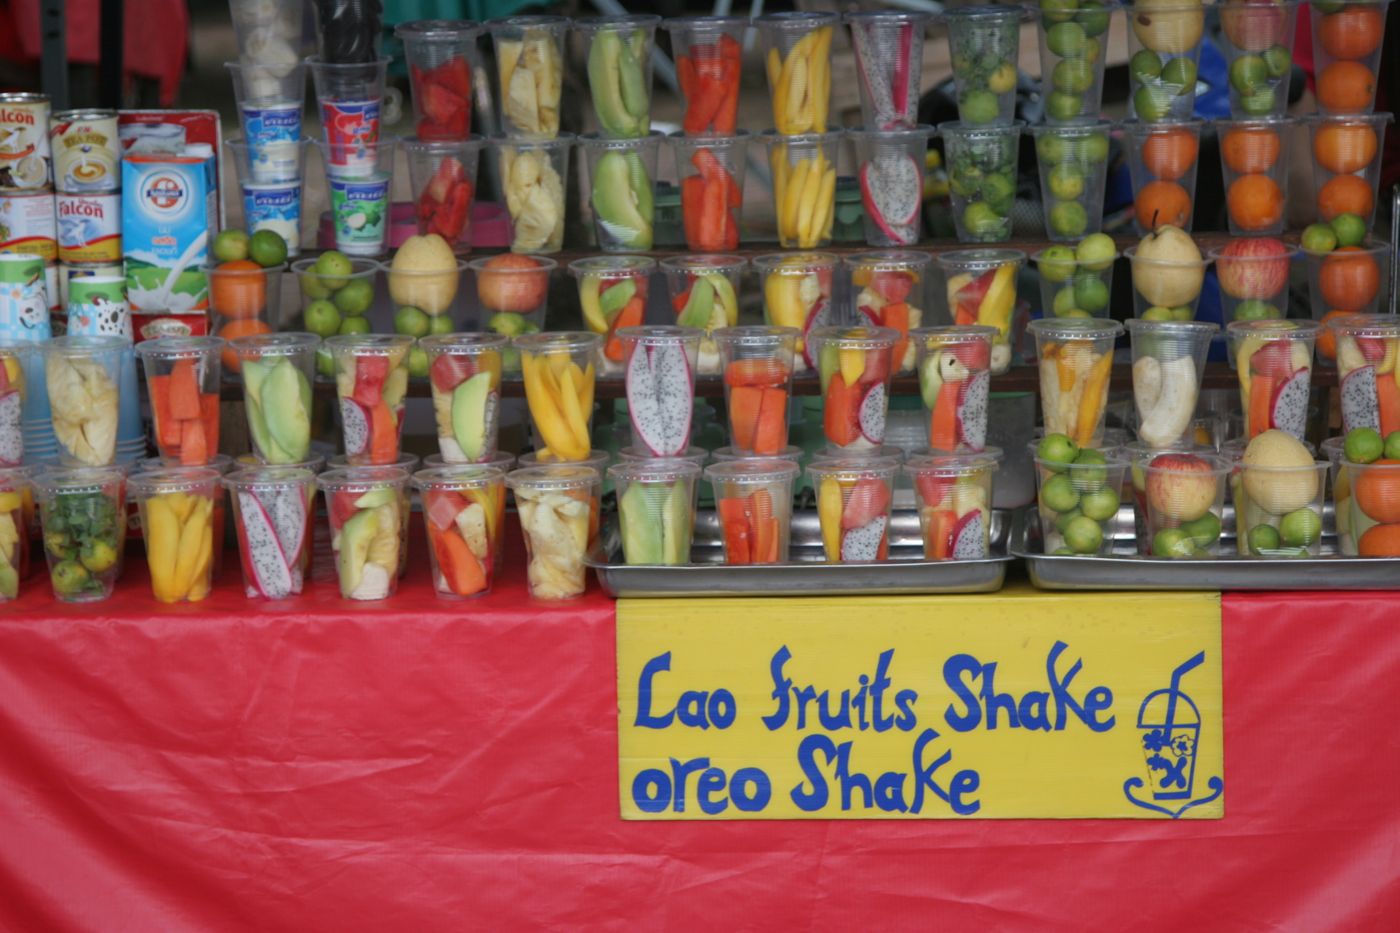 Try the best street food in Luang Prabang, Laos